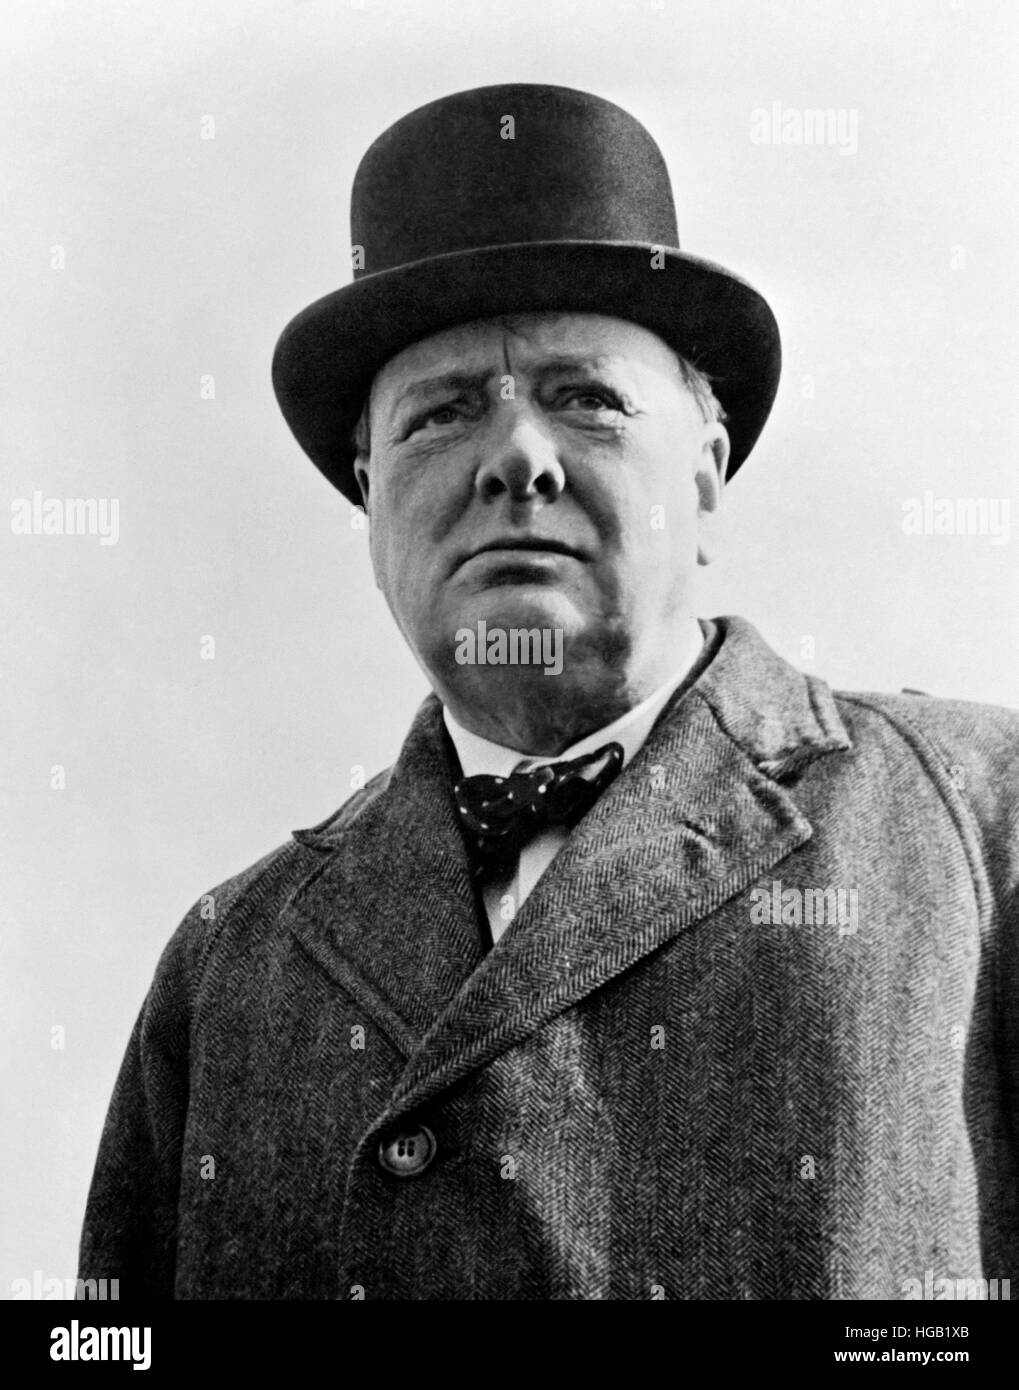 Vintage World War II photo of Prime Minister Winston Churchill. Stock Photo